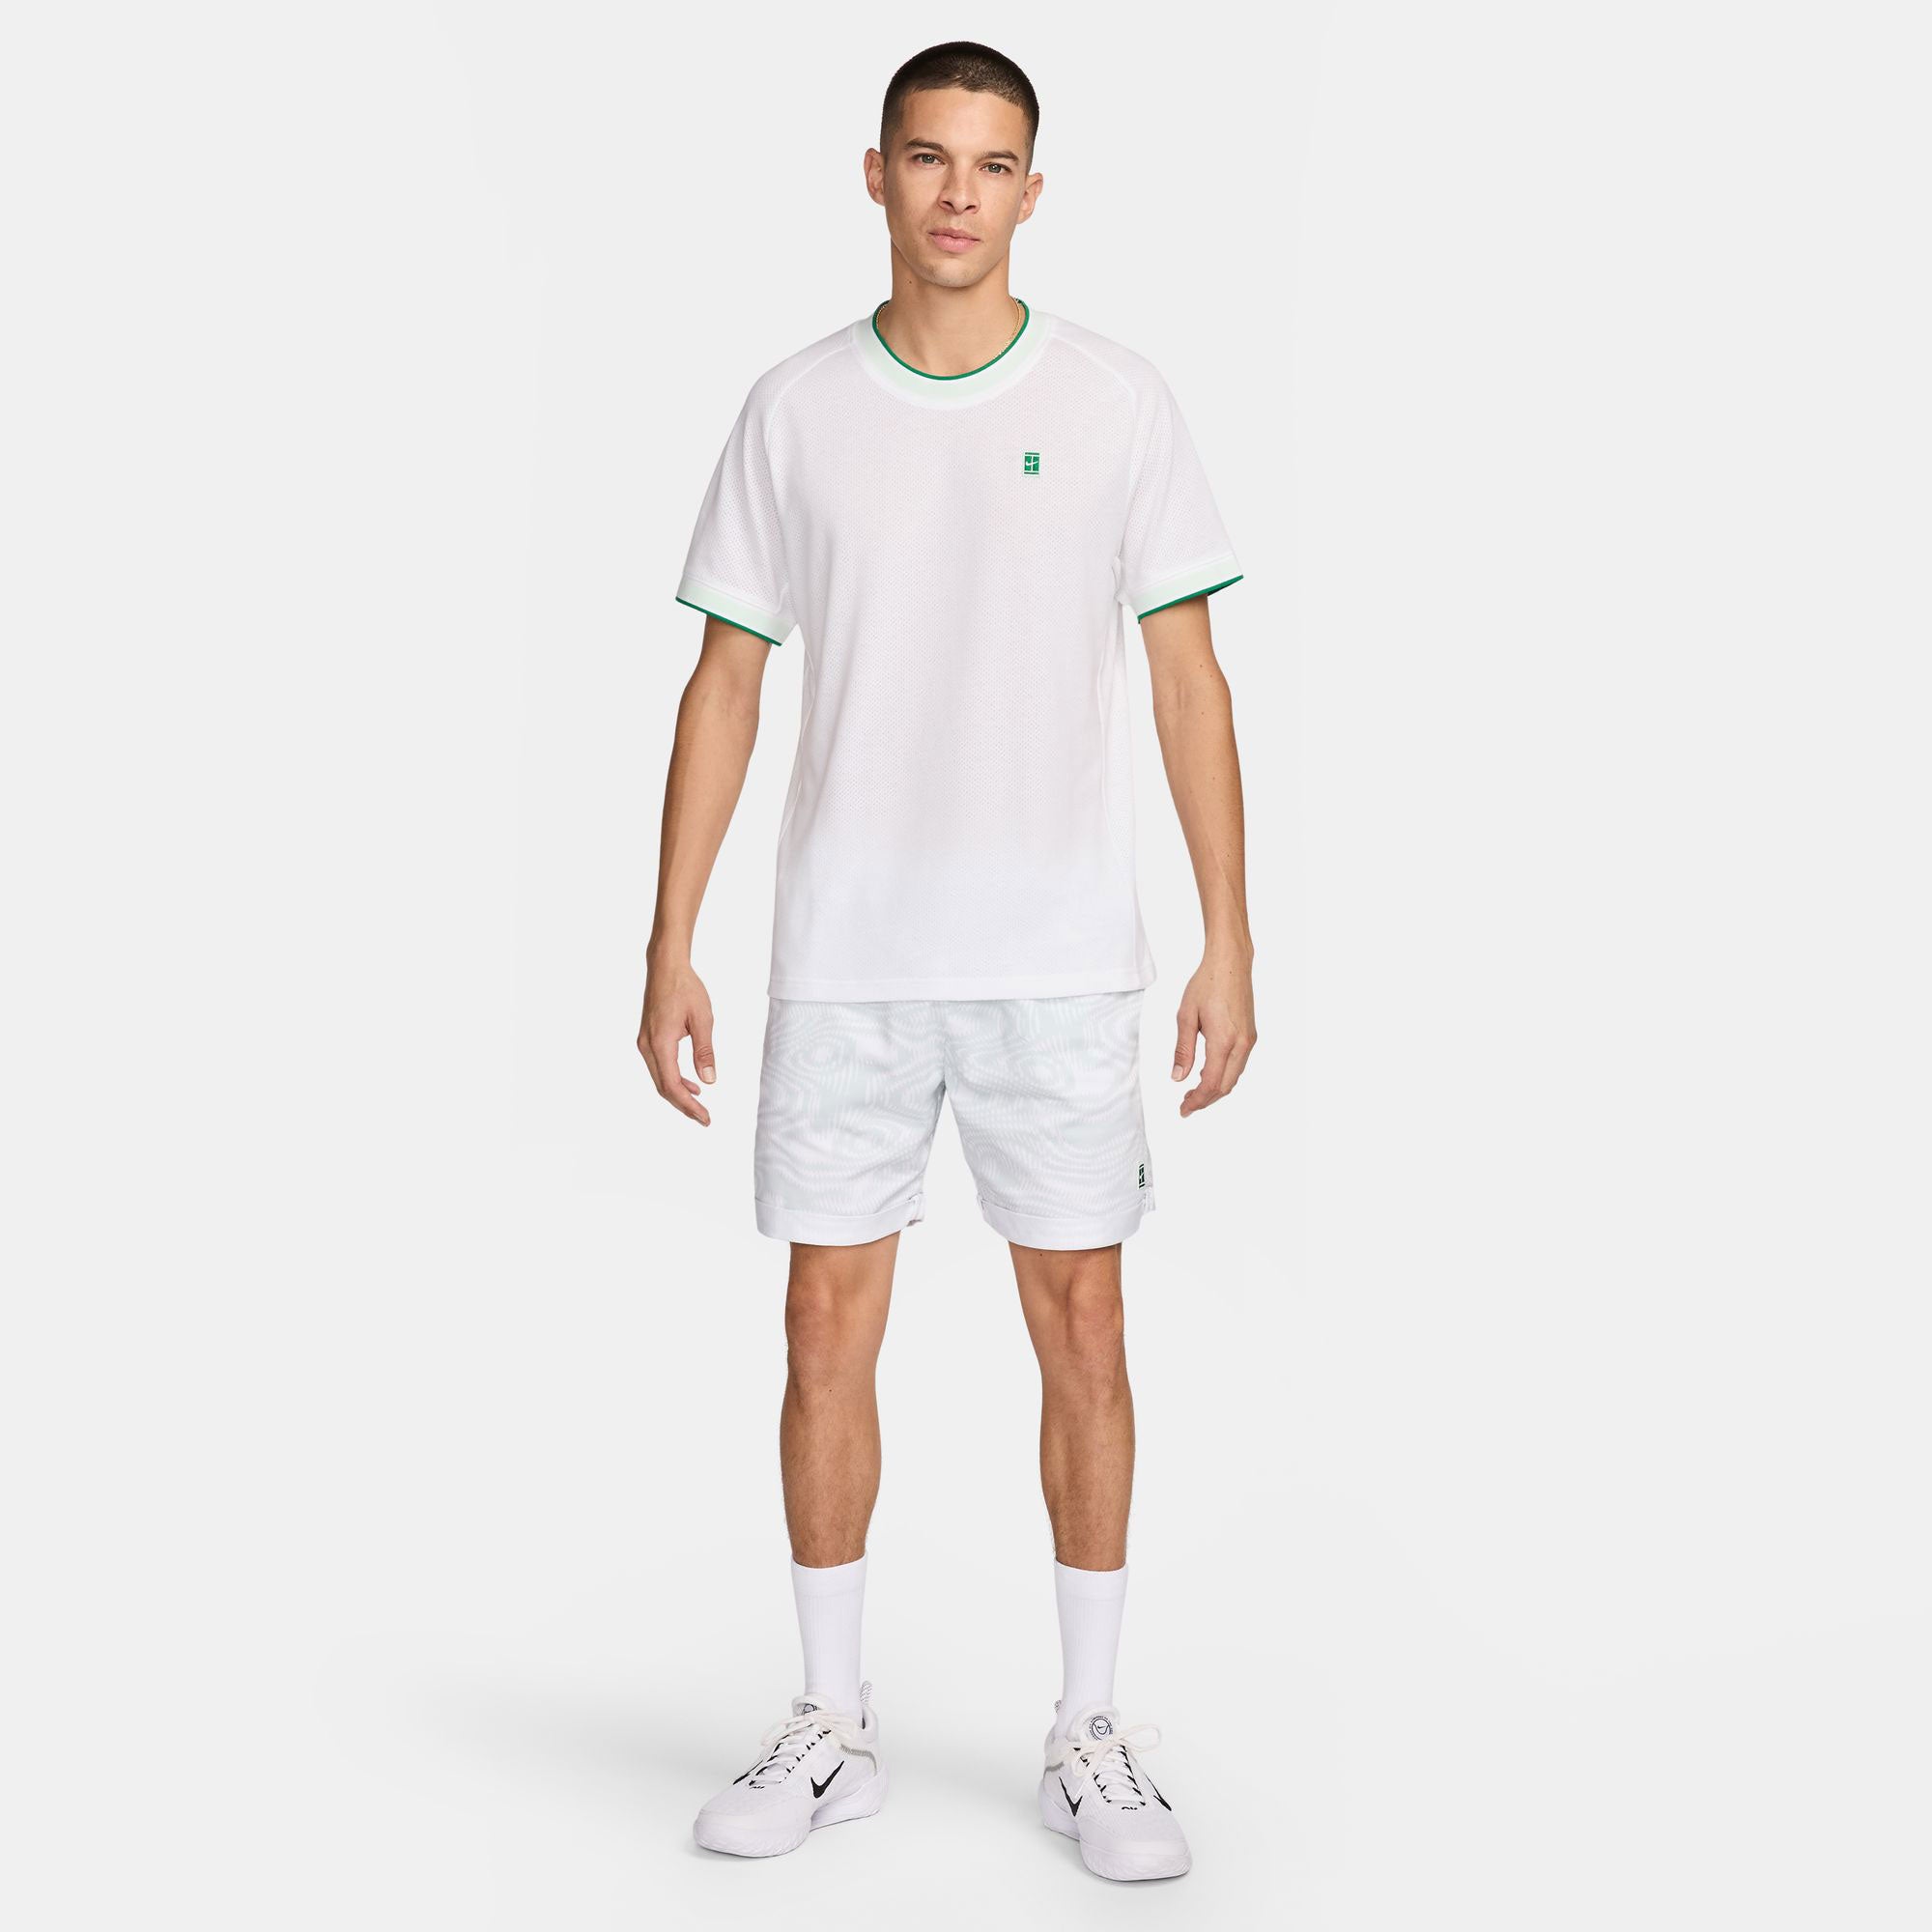 NikeCourt Heritage Mens Tennis Shirt - White (6)